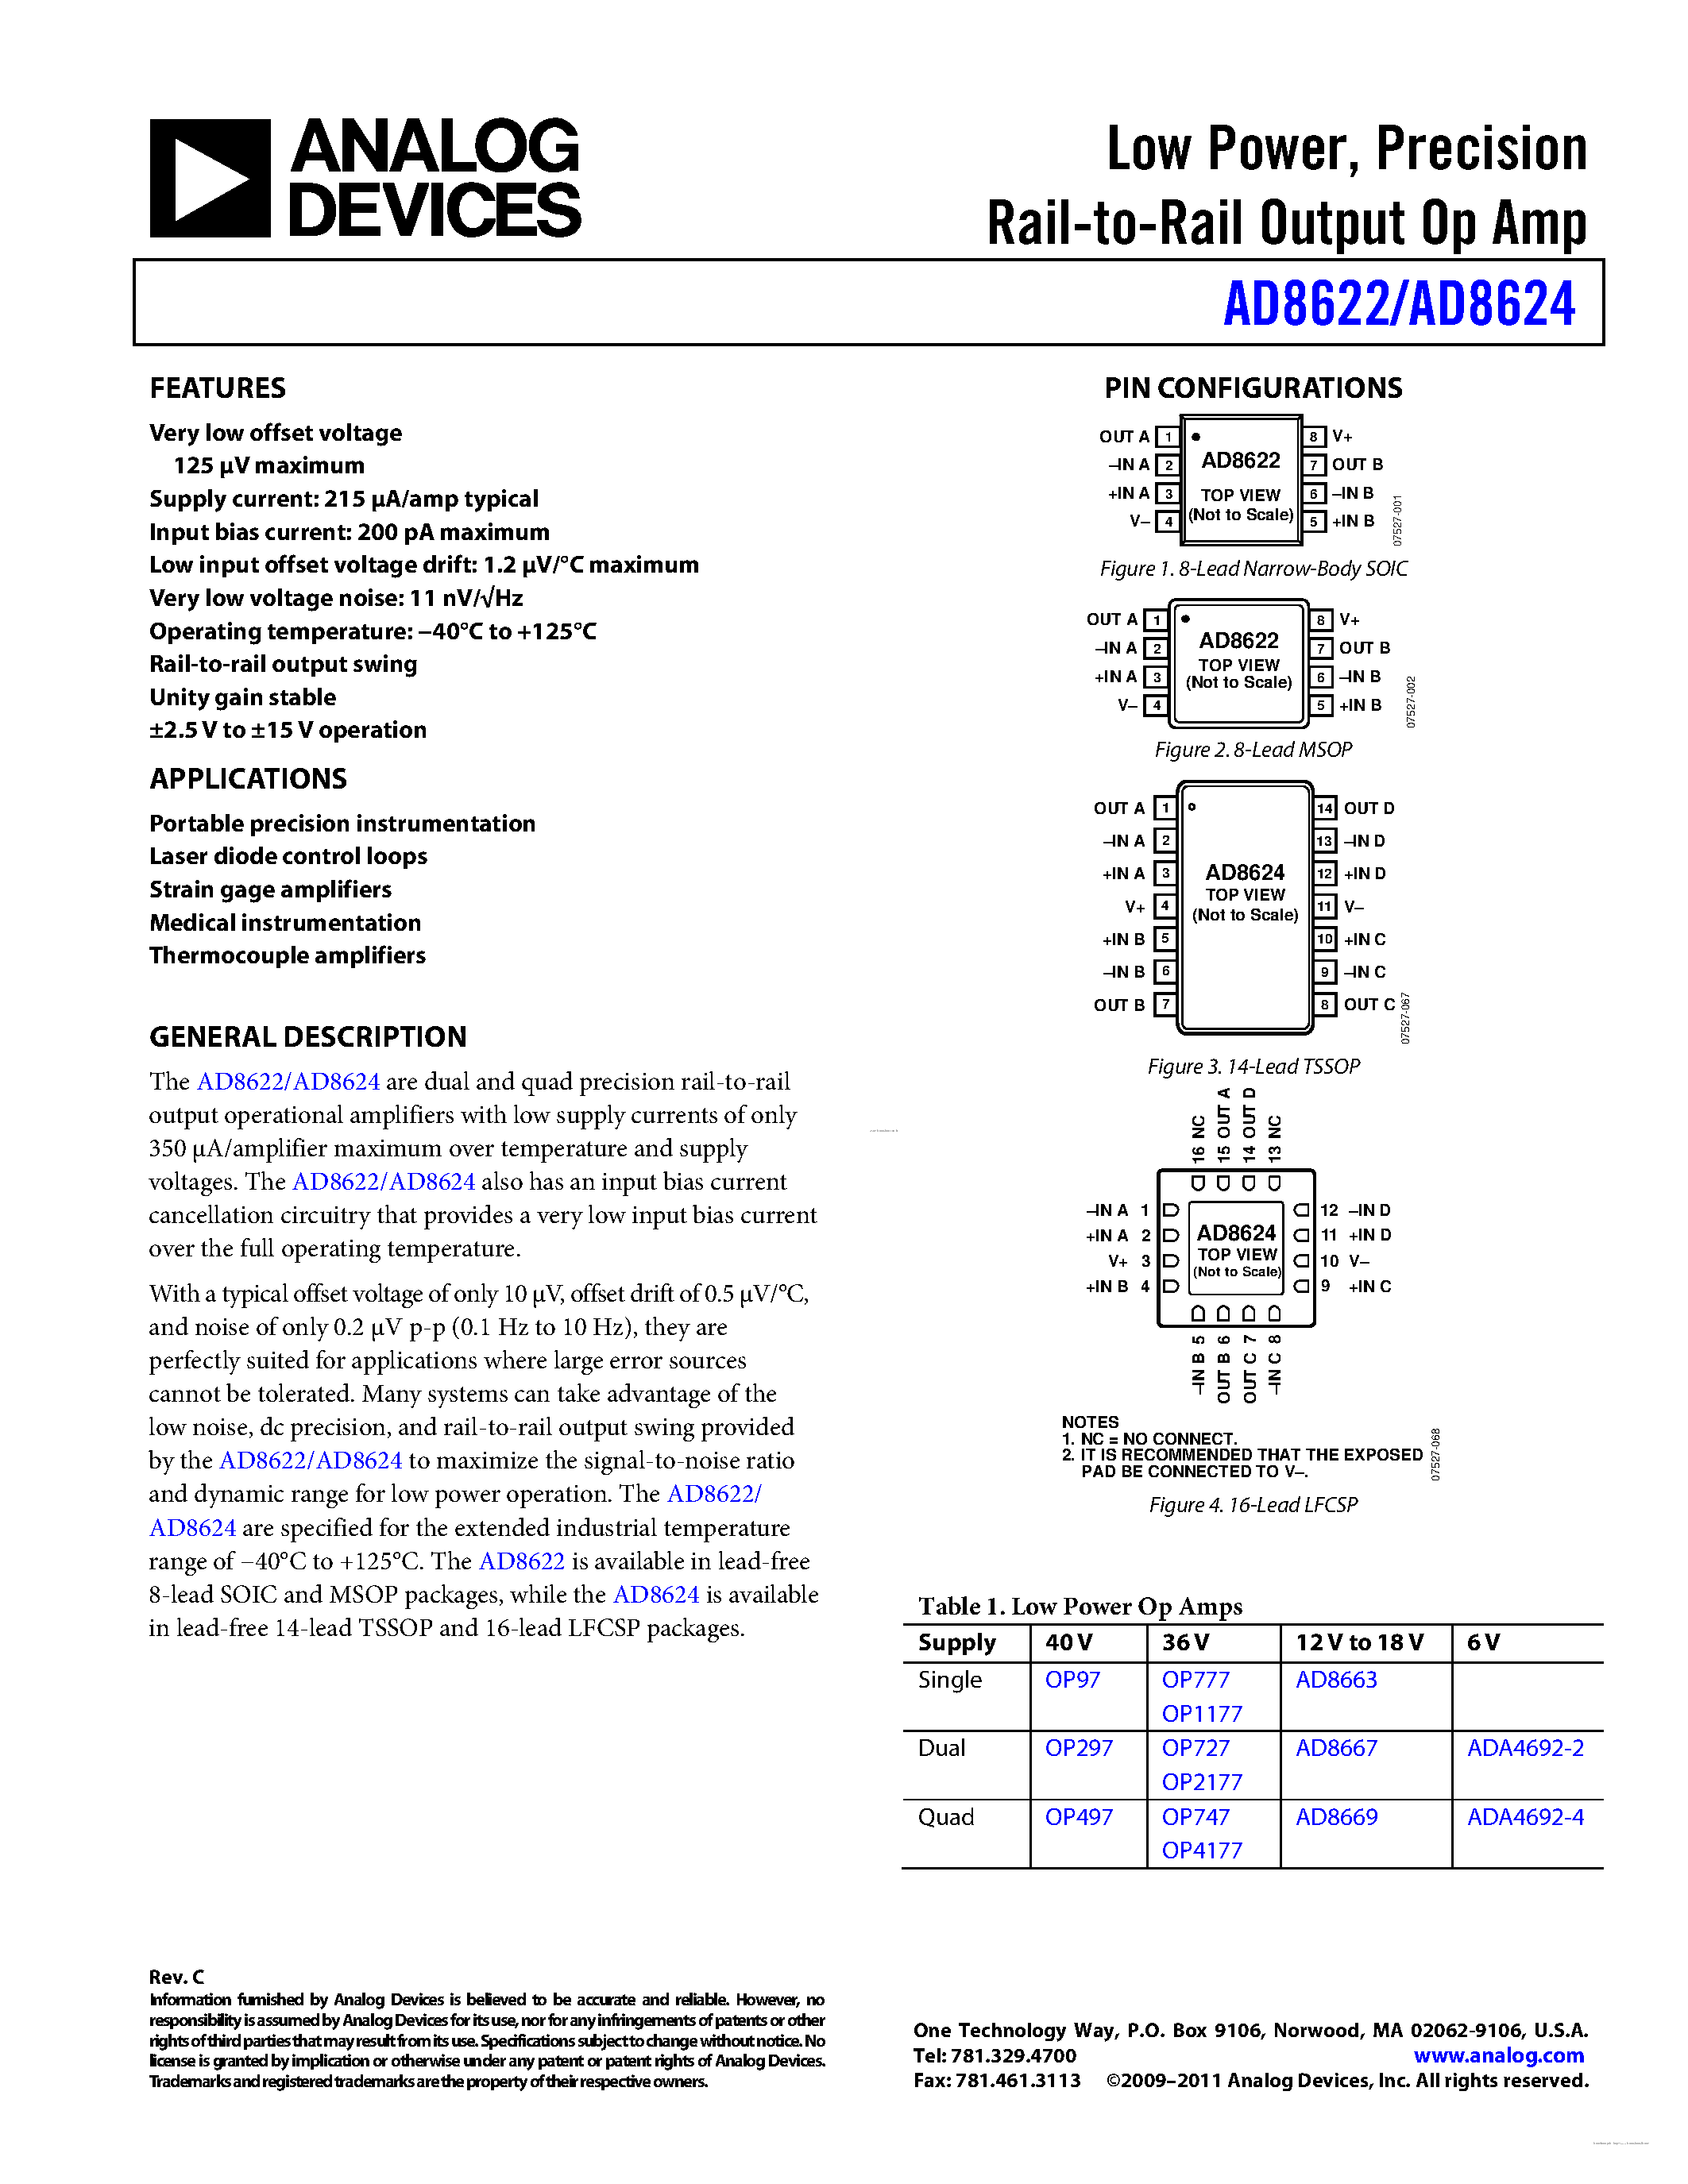 Даташит AD8622 - (AD8622 / AD8624) Precision Rail-to-Rail Output Op Amp страница 1